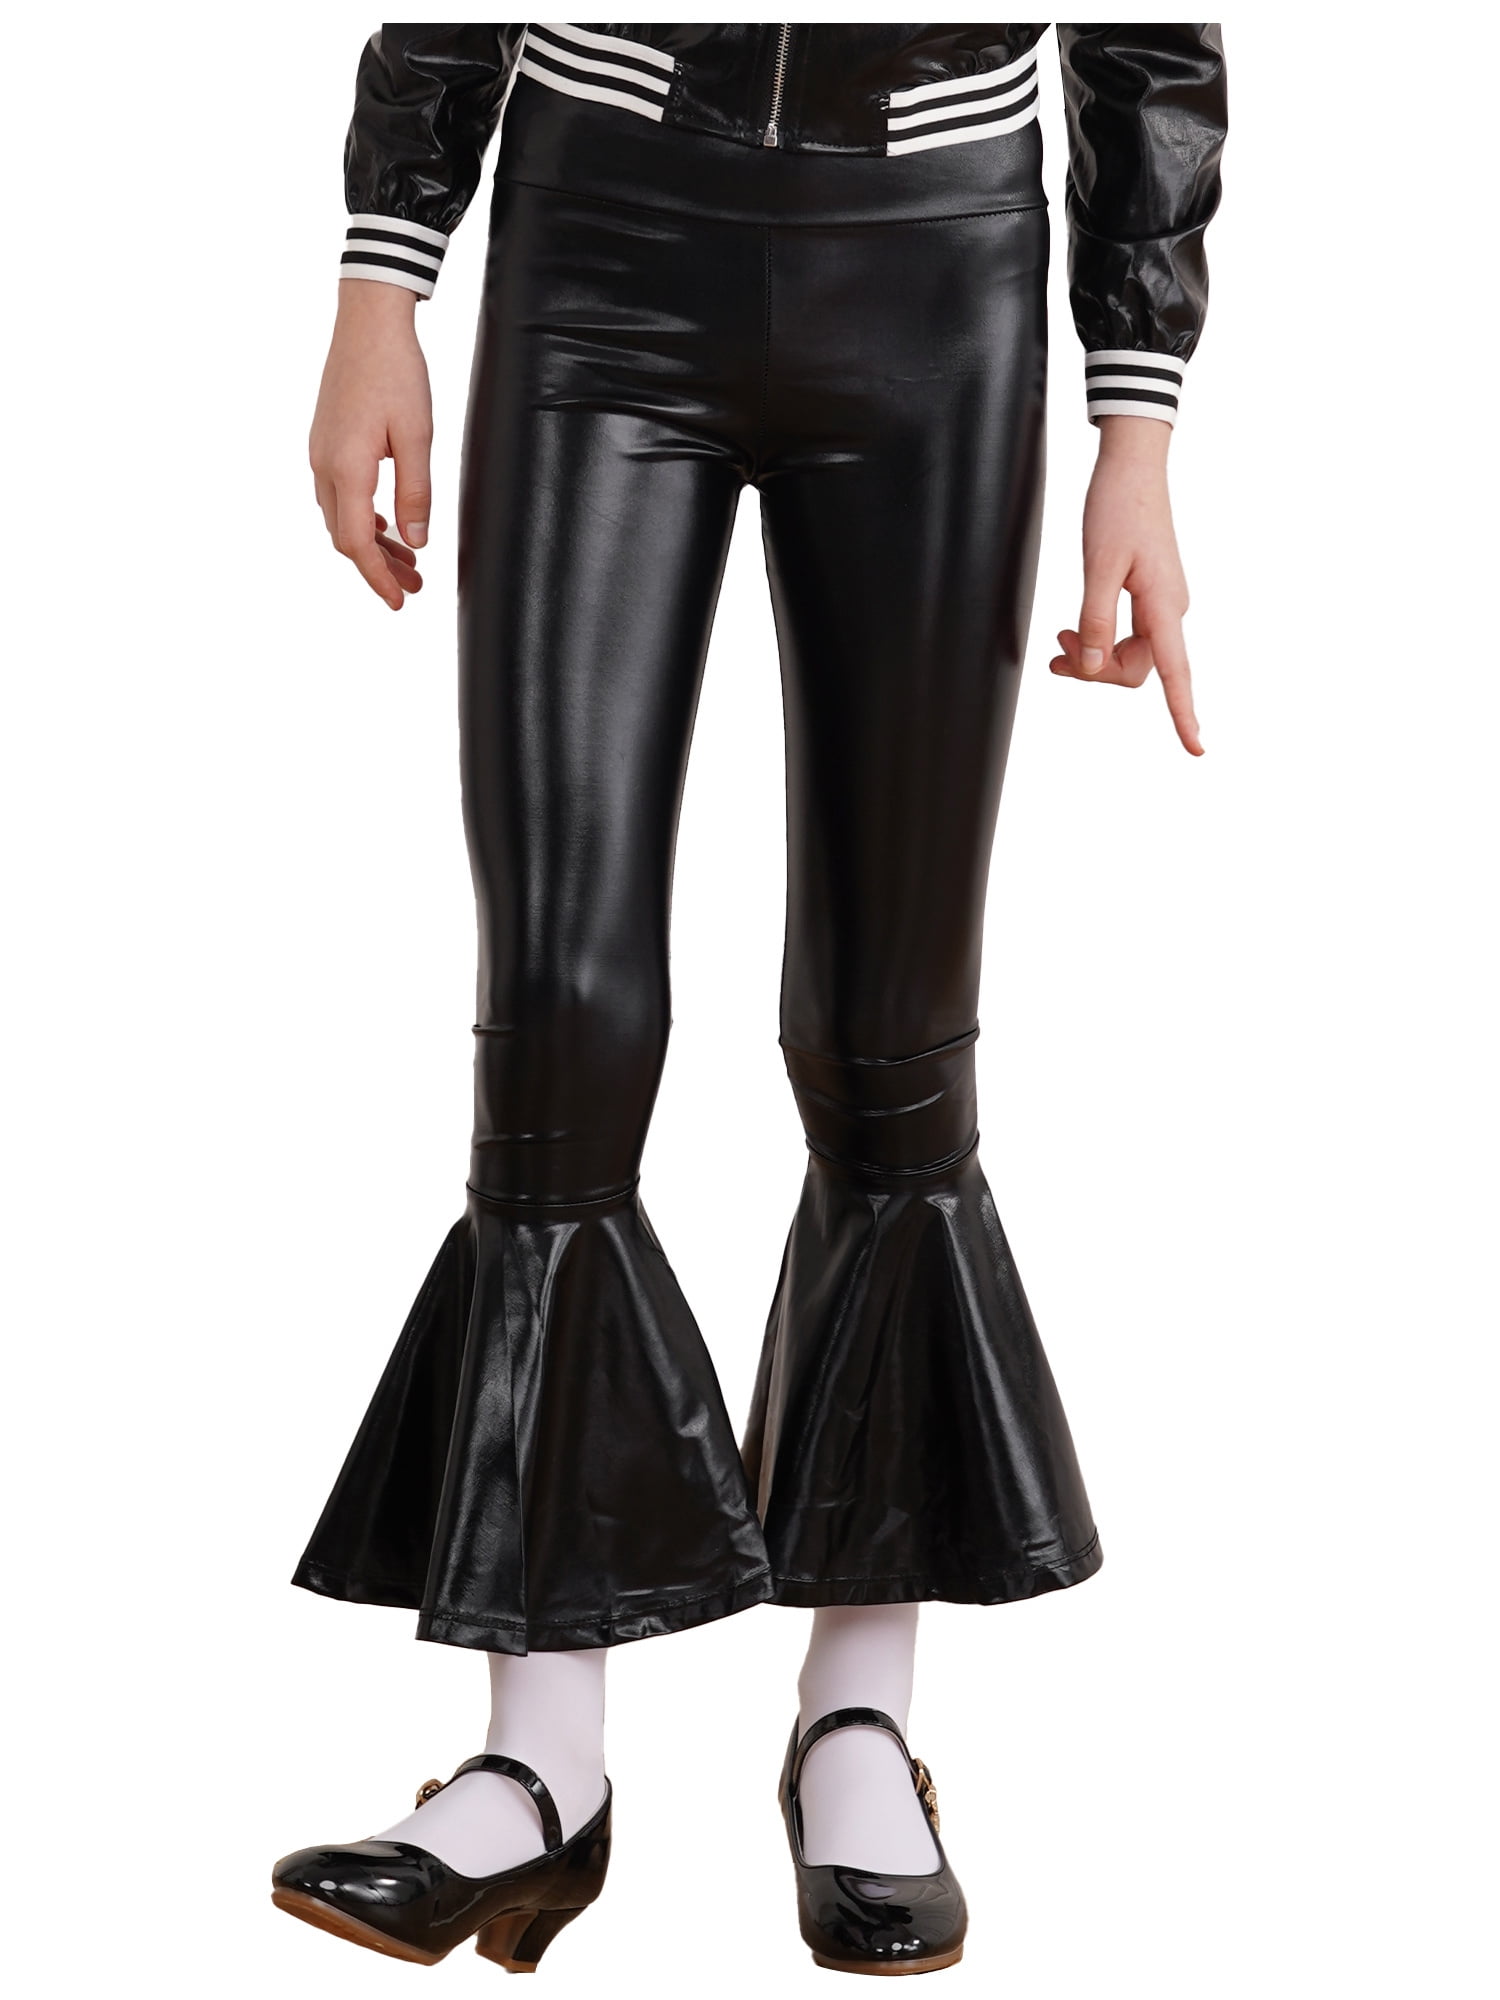 inhzoy Mens Shiny Metallic Fashion Dance Pants Holographic Disco Flared  Pants Bell Bottom Trousers